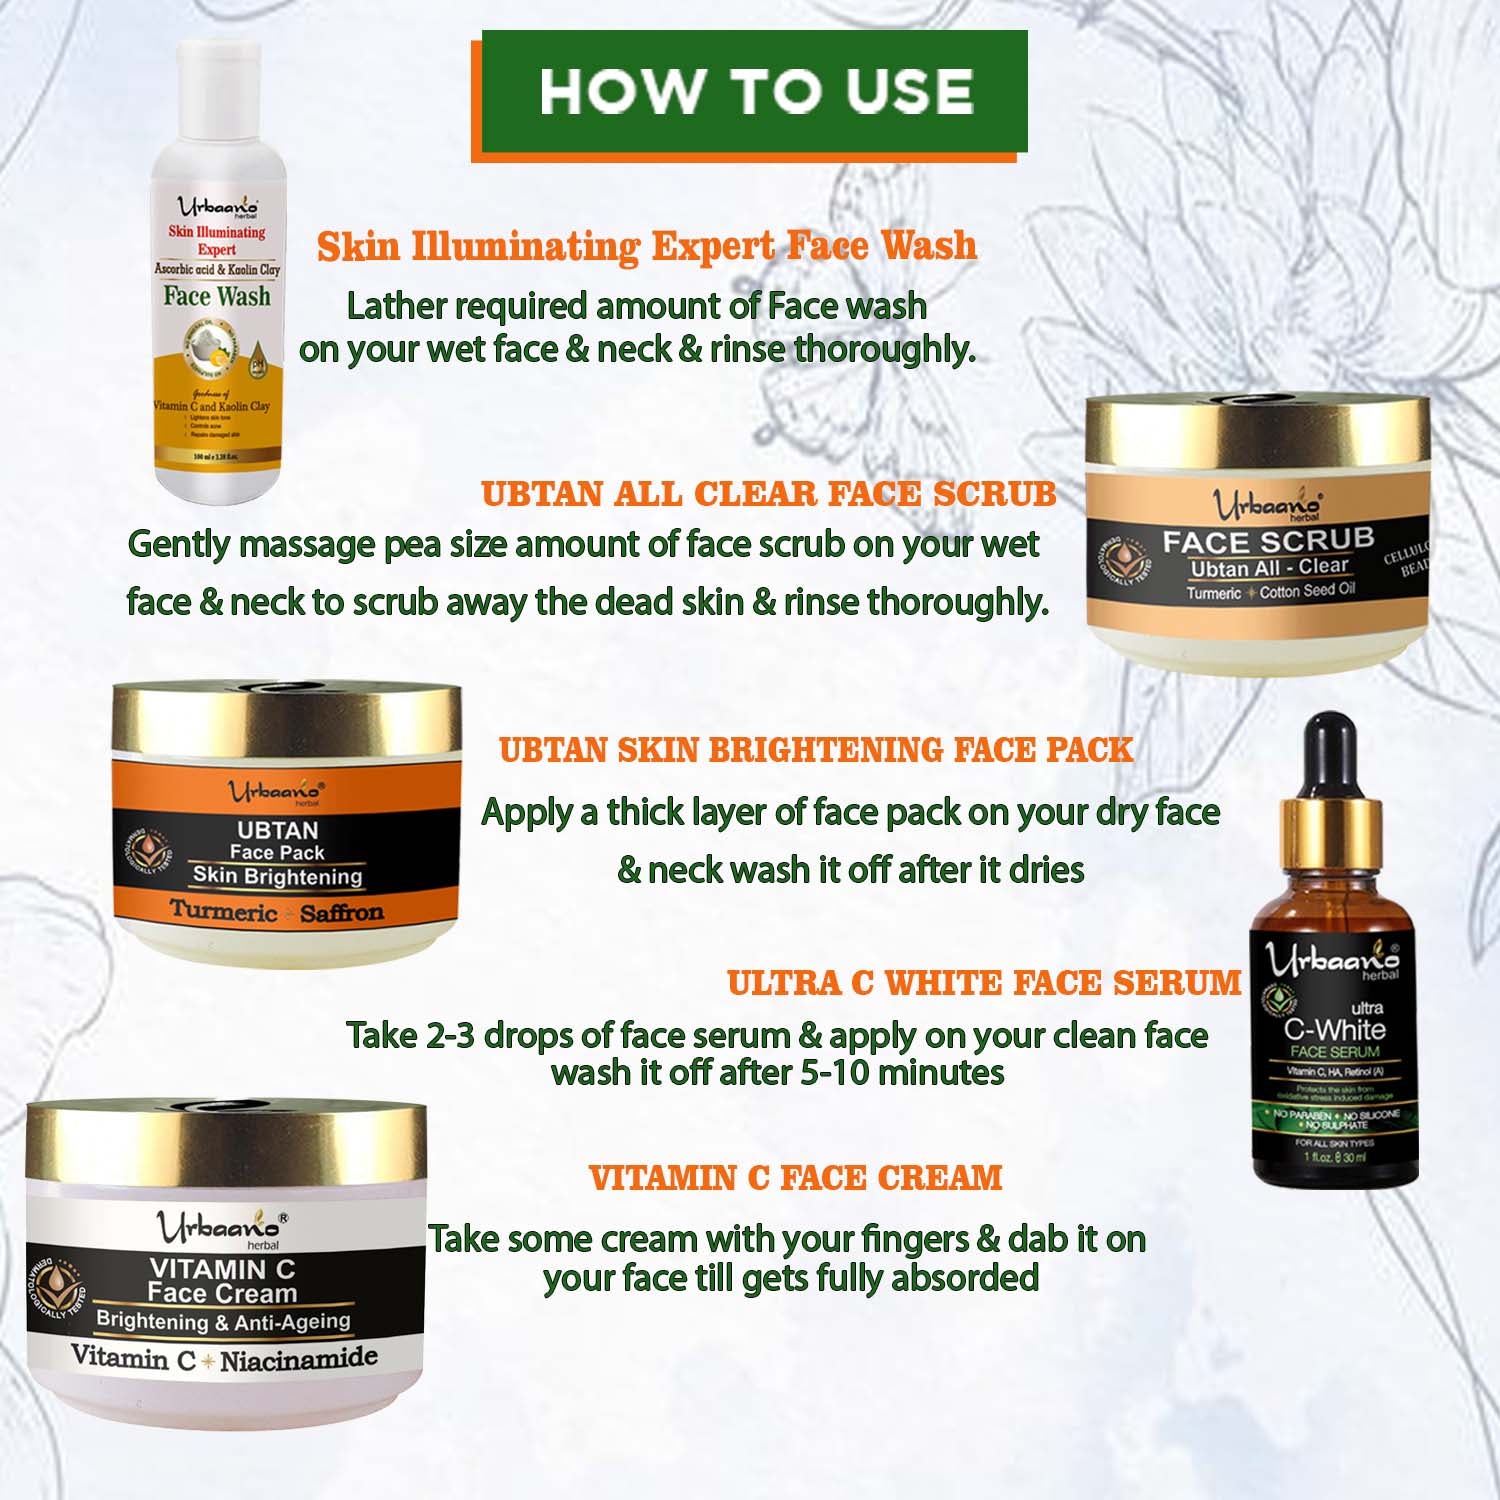 urbaano herbal vitamn c youthful glow facial kit face wash, scrub, pack, cream, serum easy to use in 5 steps